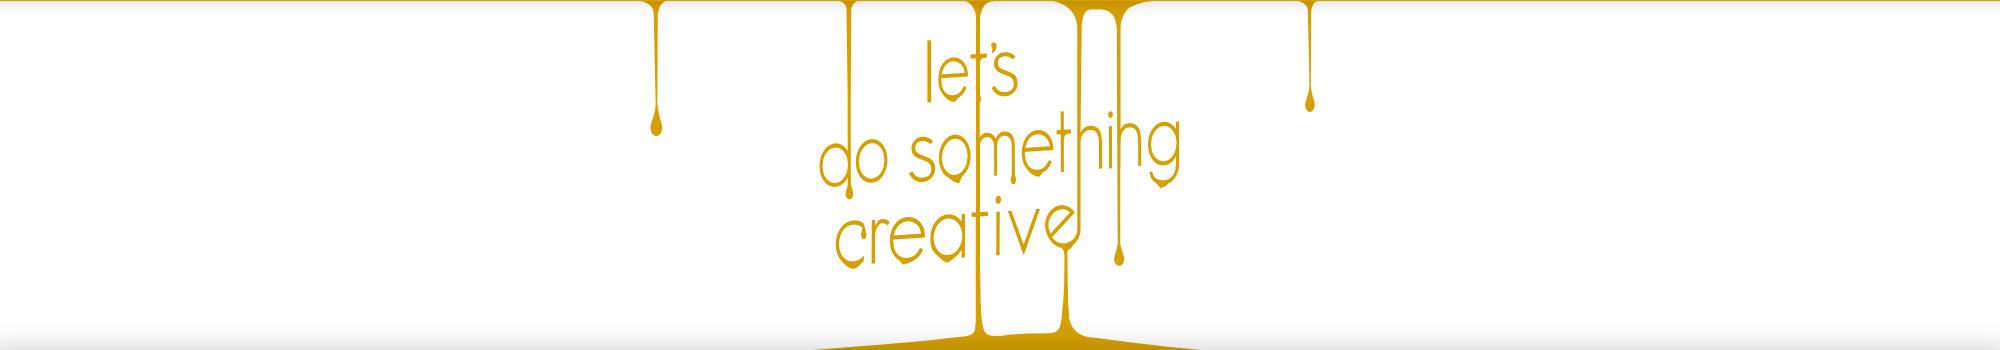 Ewert Grafikdesign - let's do something creative